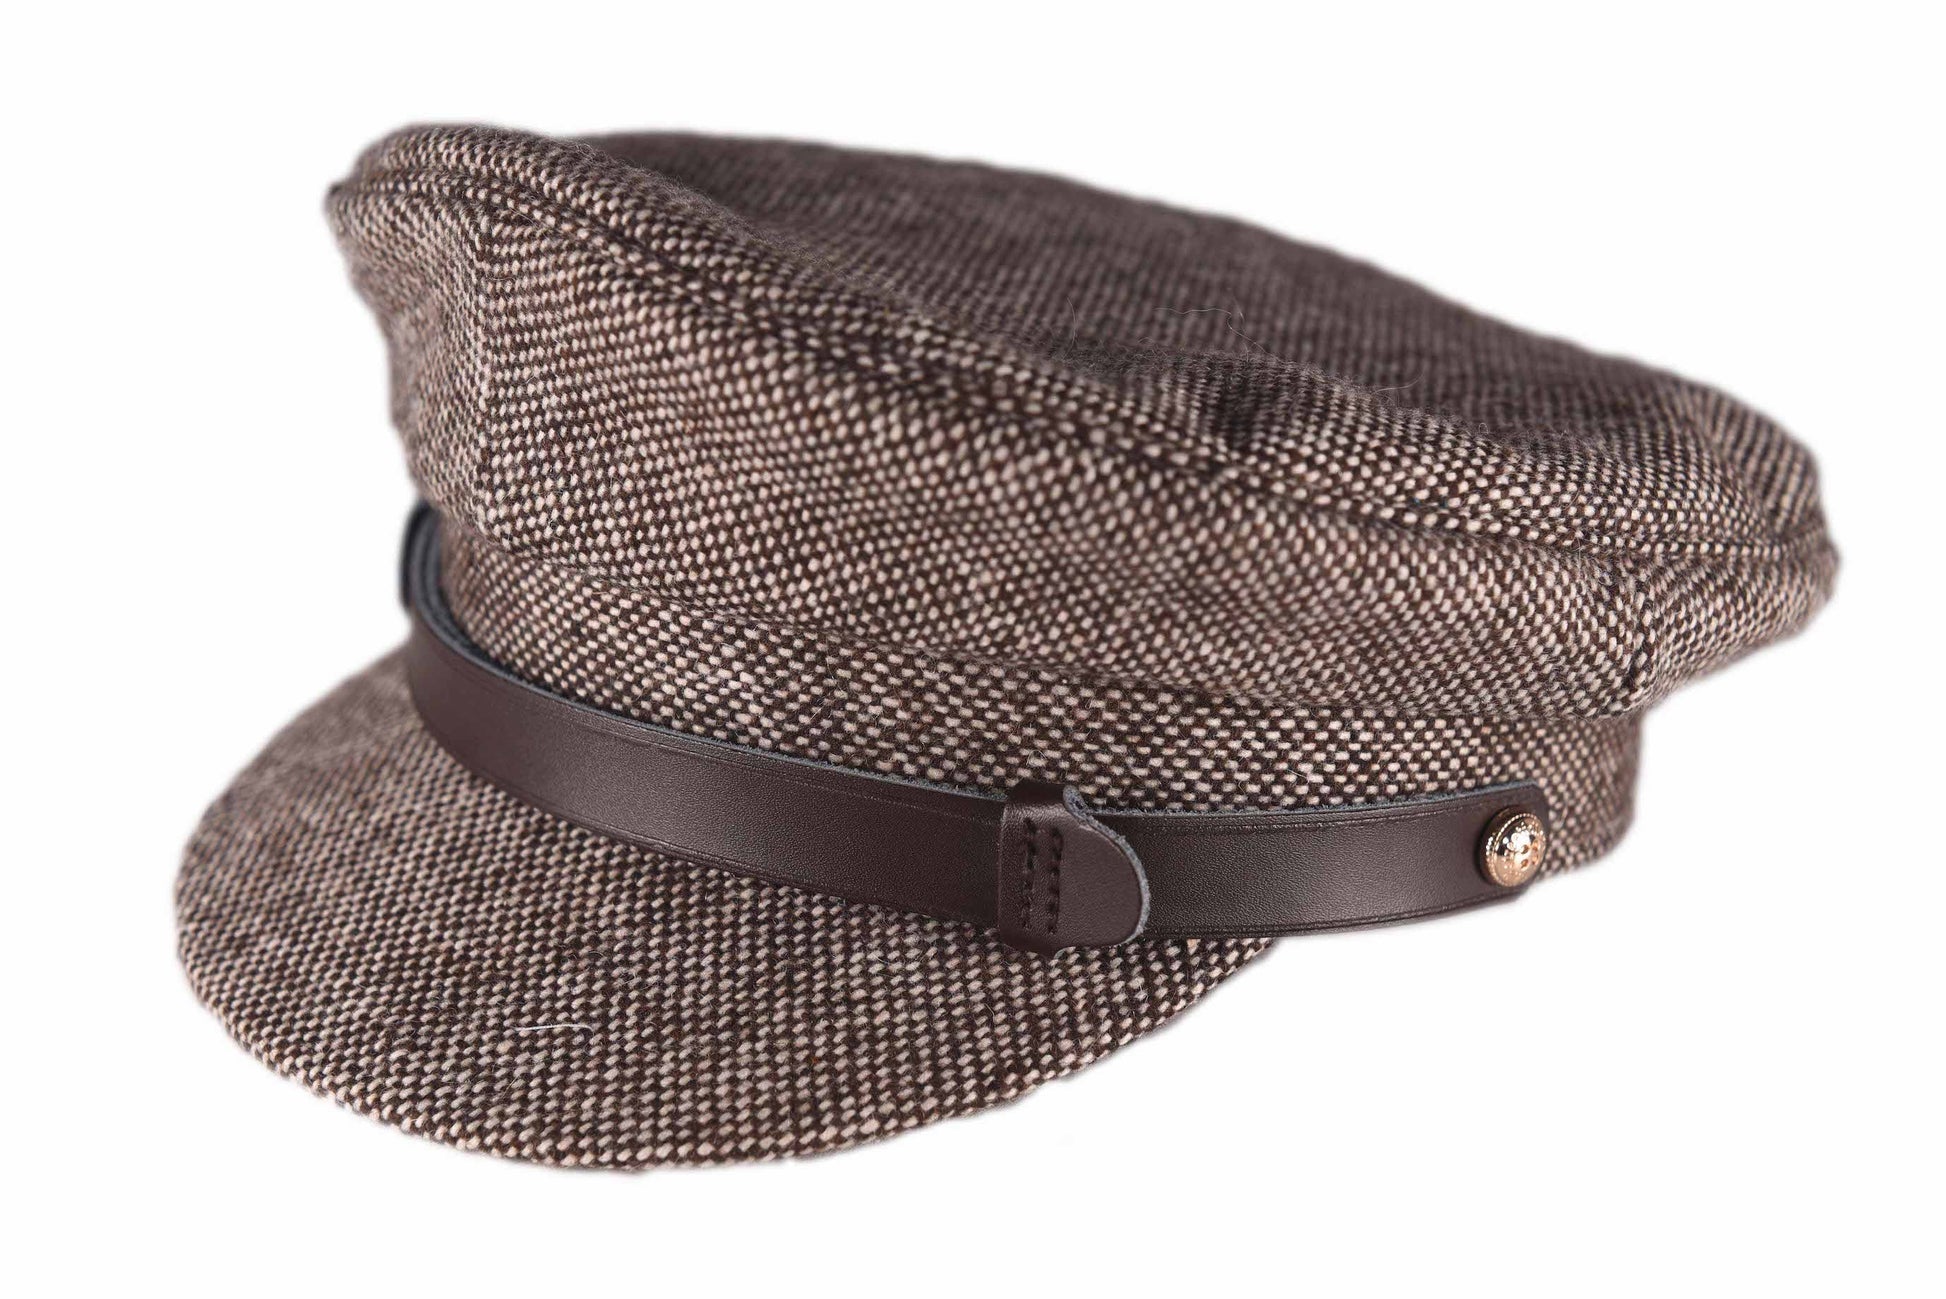 boonie doon, leitenant hat, hat, cap, byron bay fashion, byron style, google, street style, australian hat, tweed, brown, canvas, leather